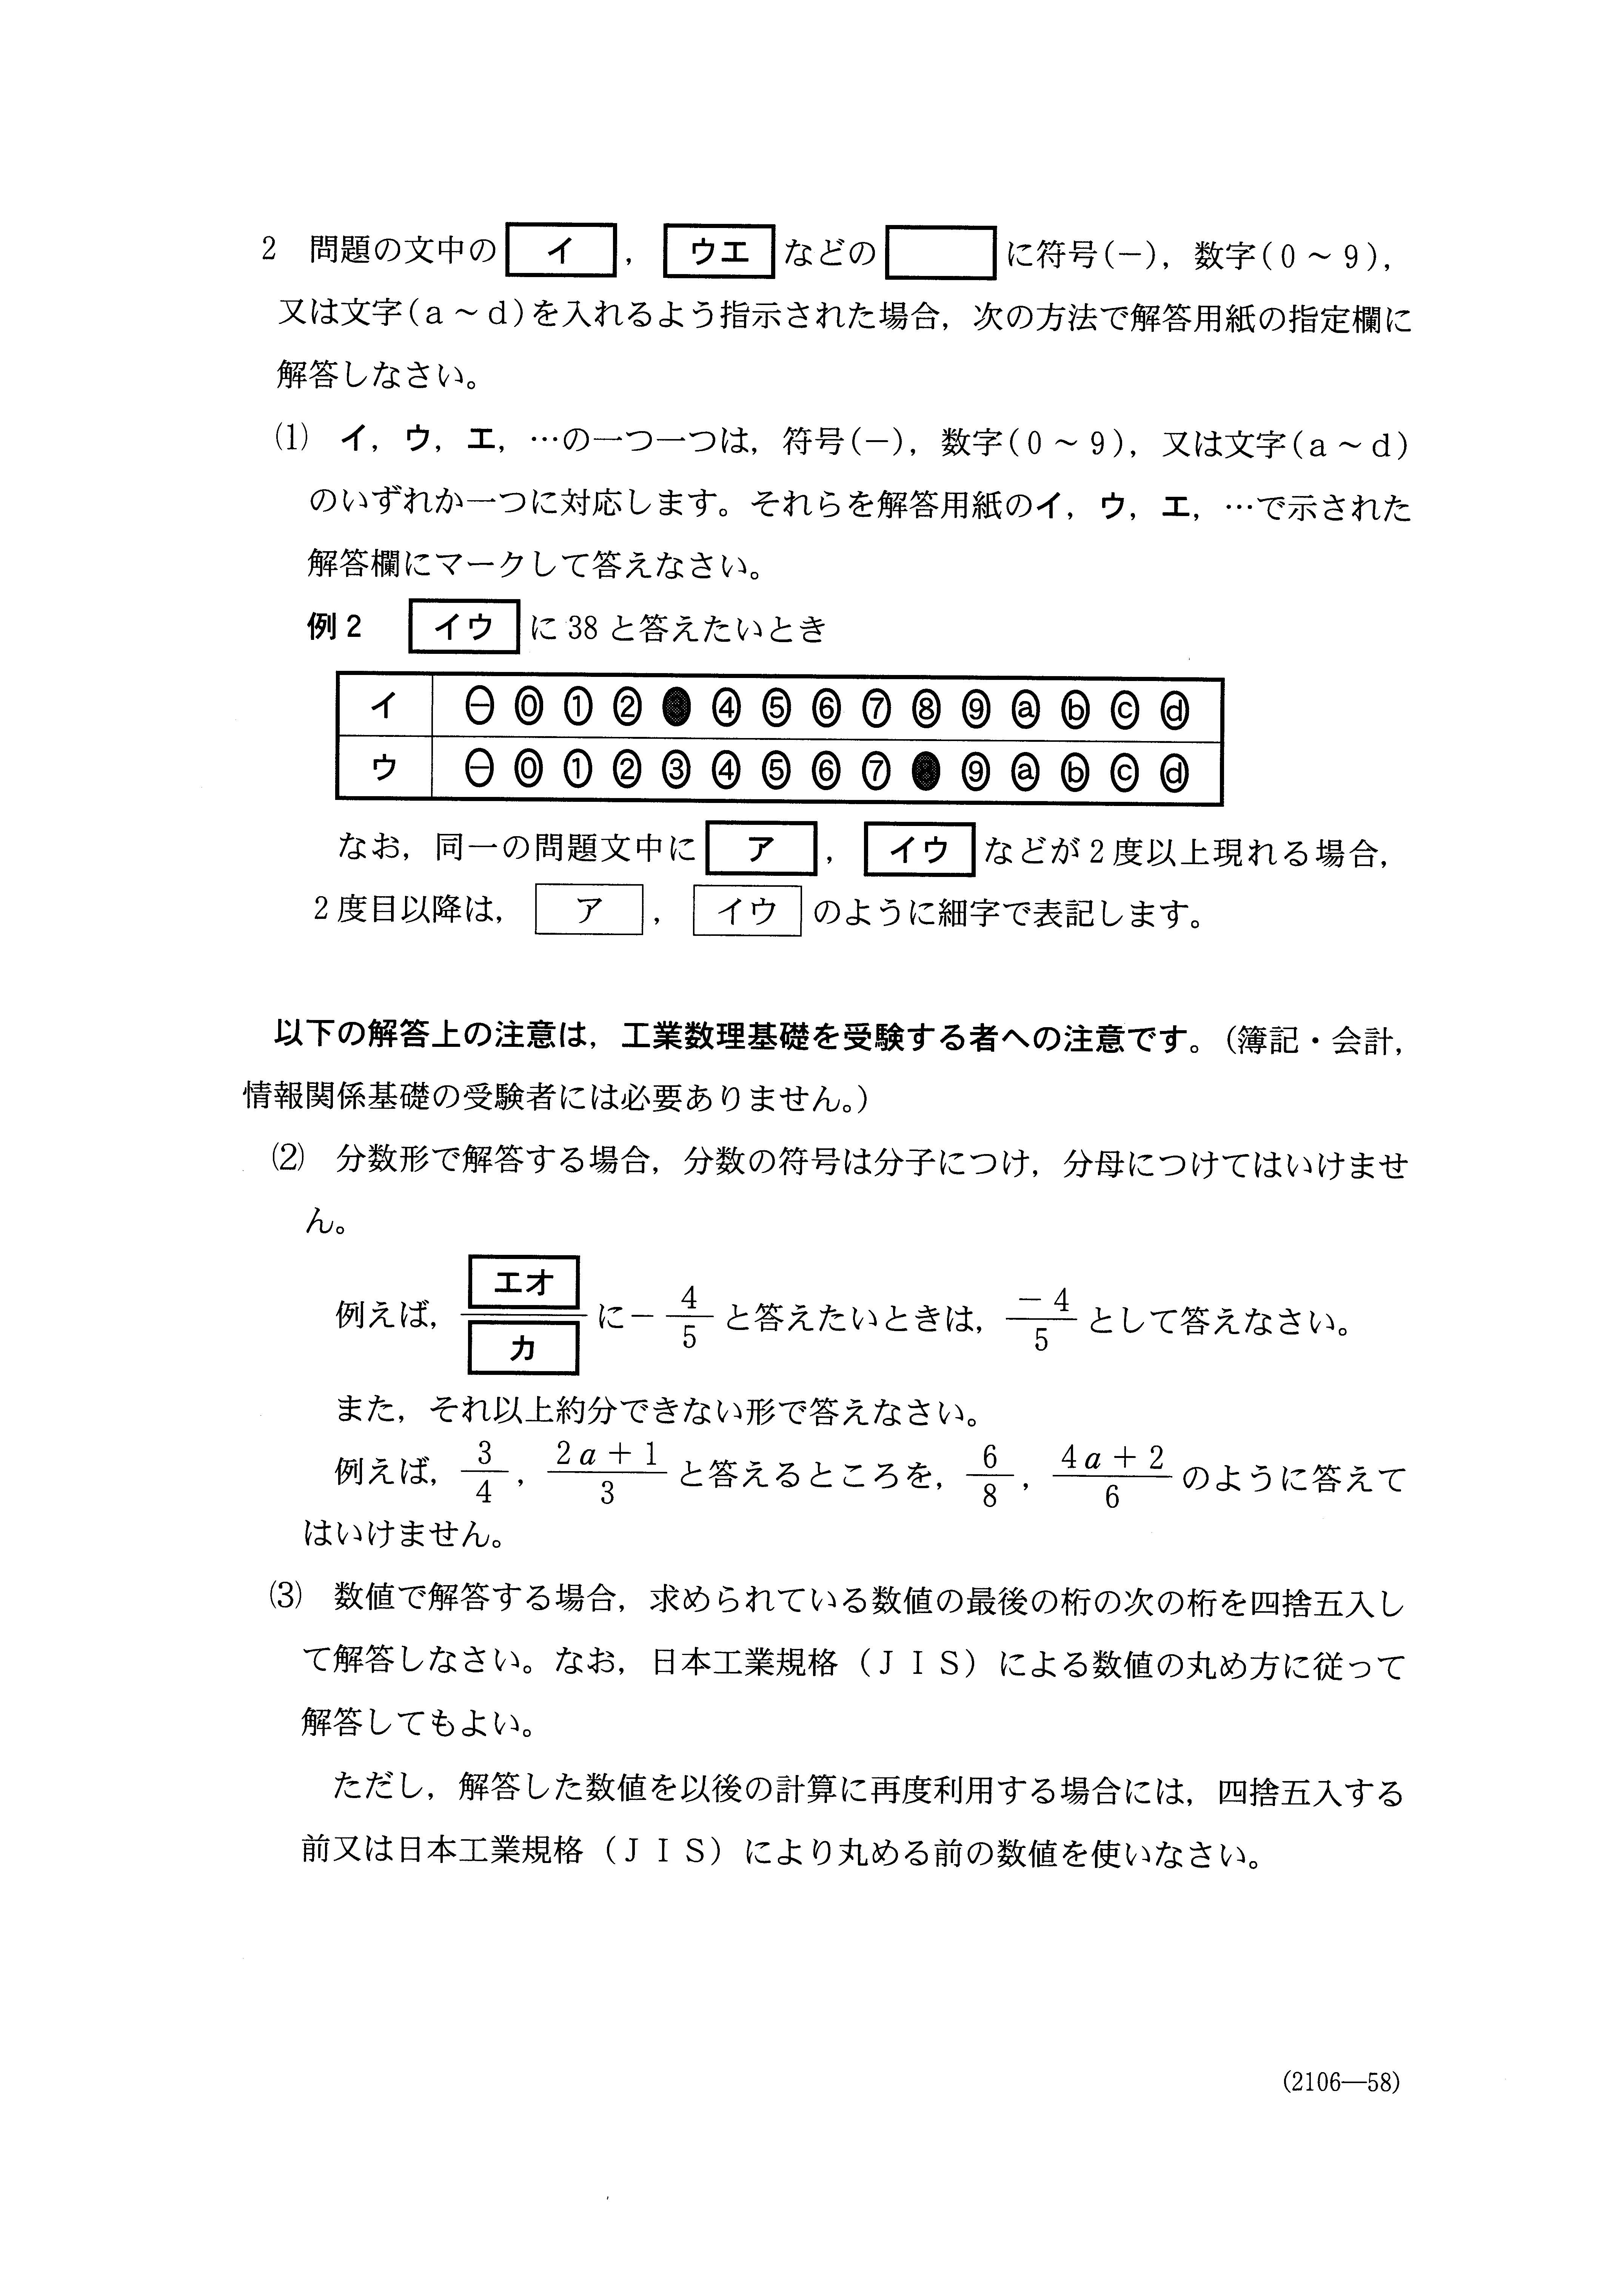 H28別冊 工業数理基礎 大学入試センター試験過去問